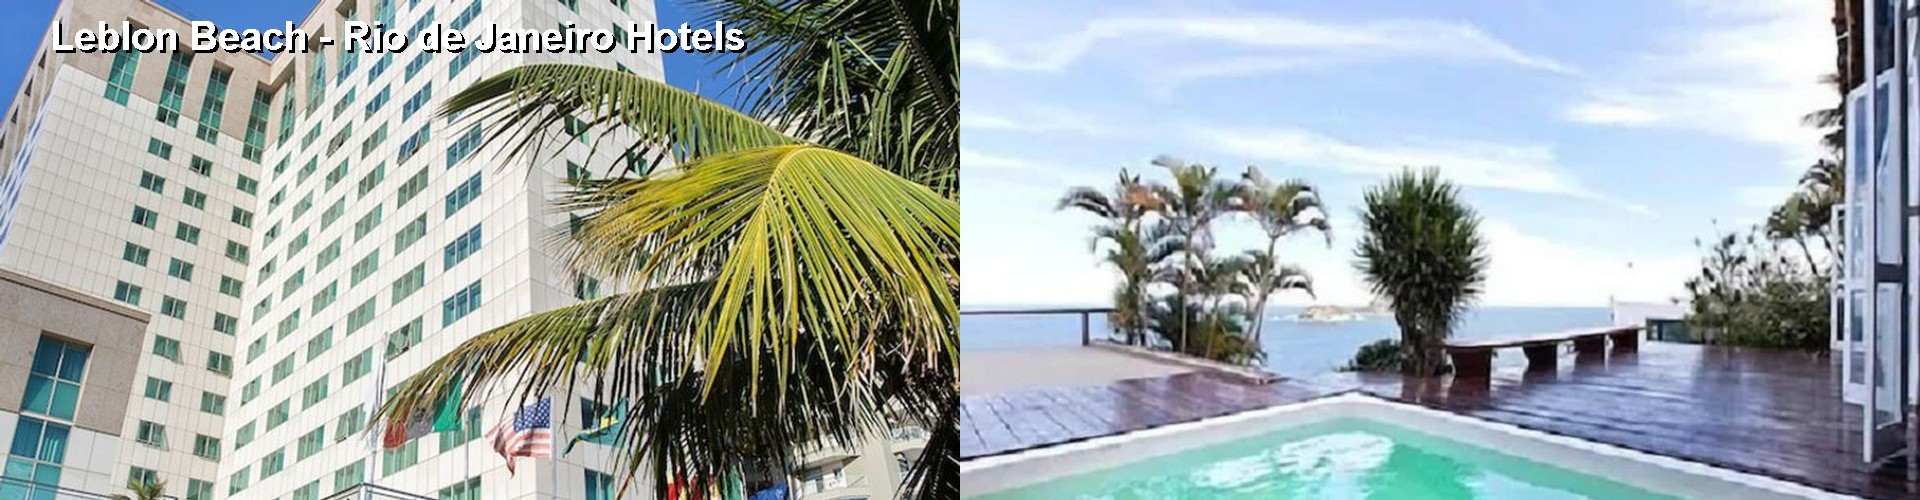 5 Best Hotels near Leblon Beach - Rio de Janeiro